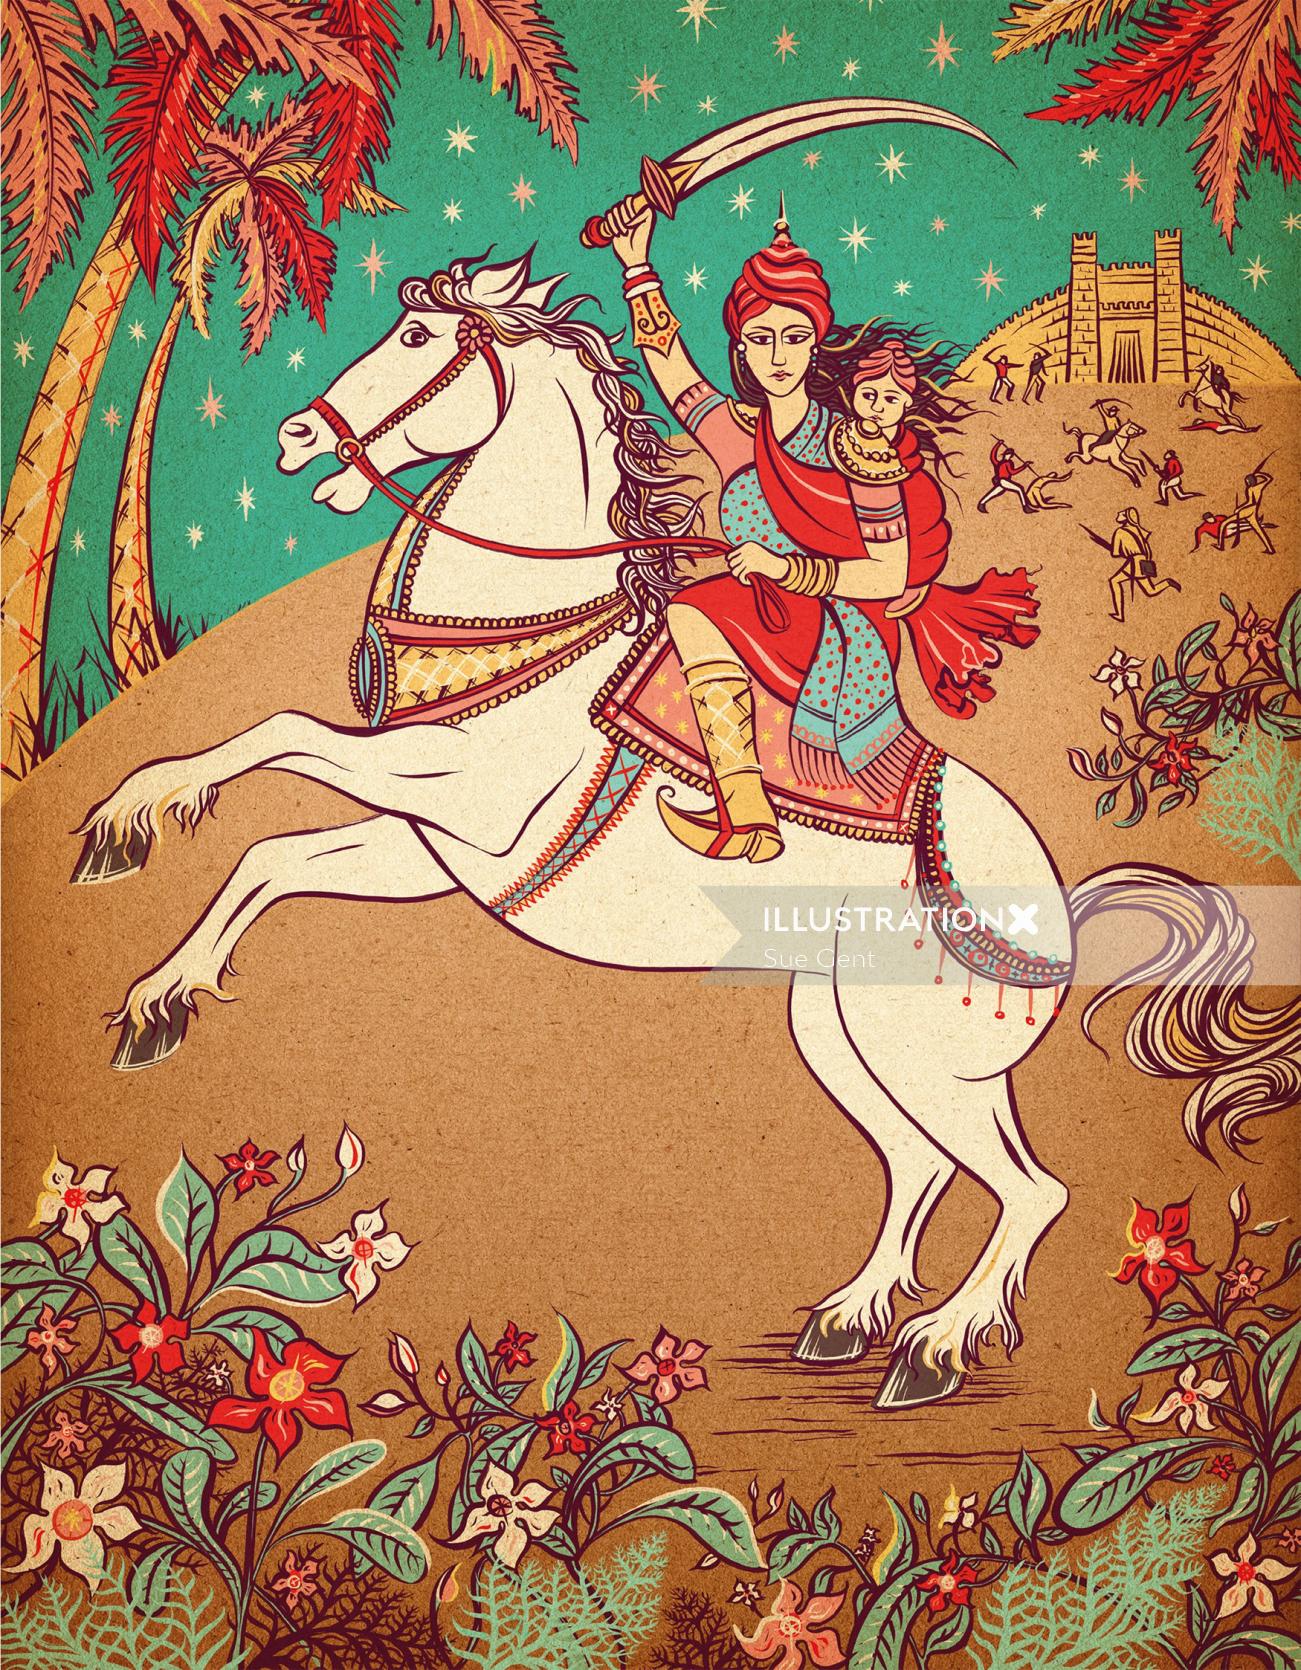 Rani lakshmi bai book cover design 